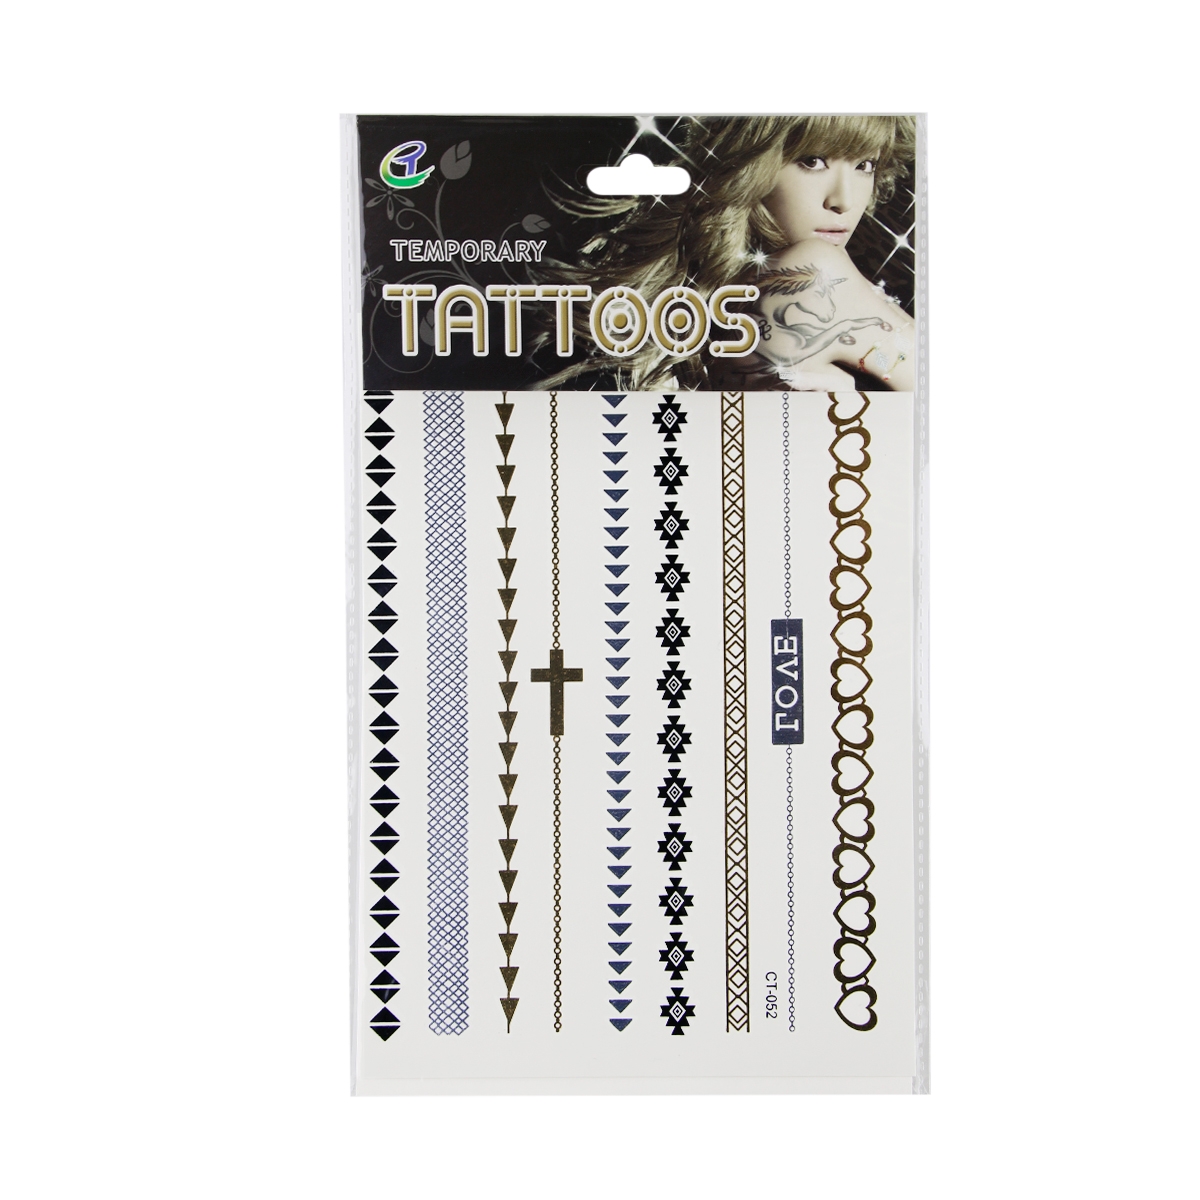 Ogc Tatuaj corp temporar metal tatto stickers ct-052